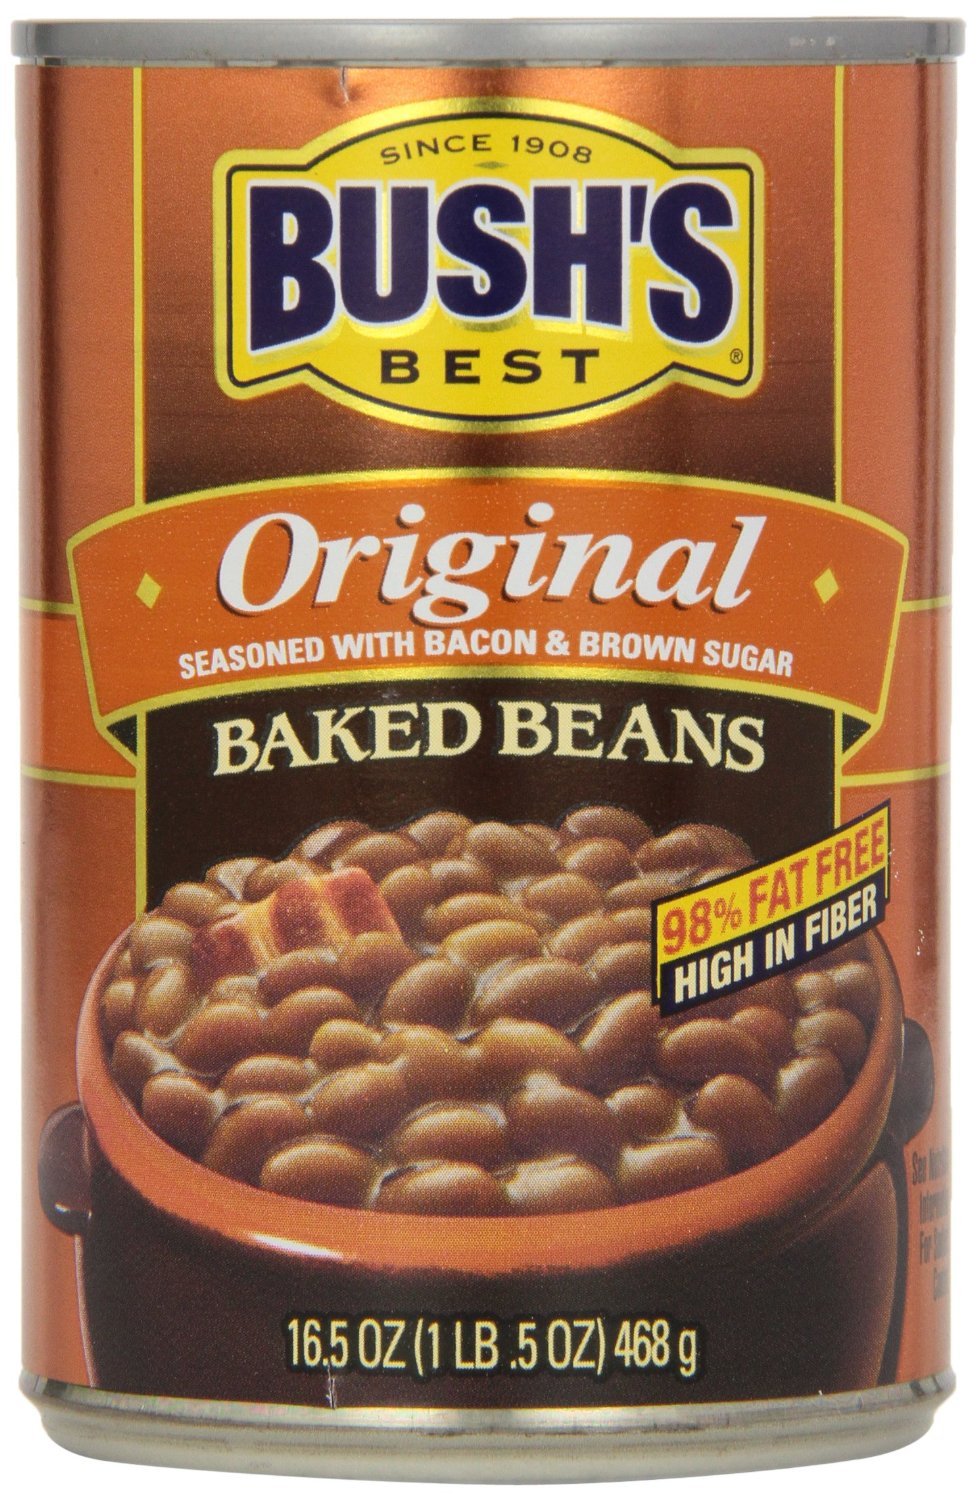 Bush's Baked Beans Original 16.5 oz